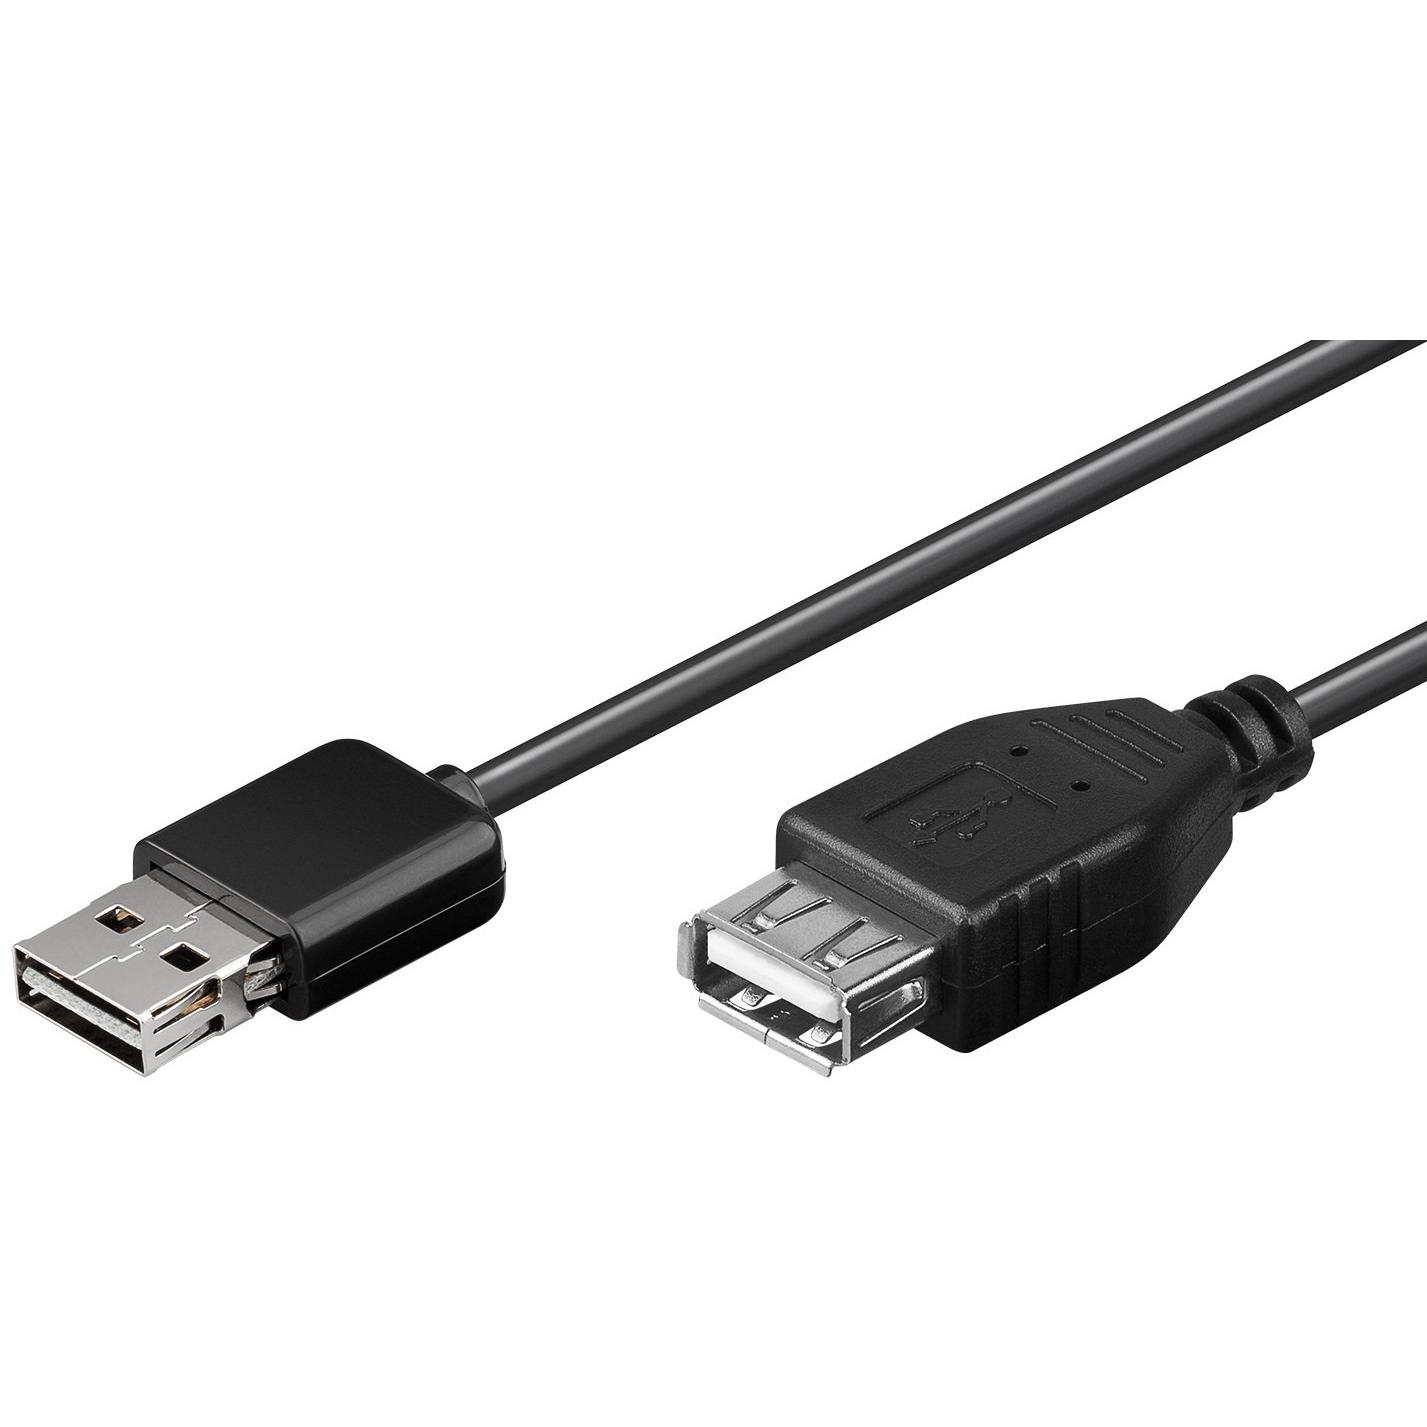 Prolunga USB 2.0 Hi-Speed A Maschio / A Femmina 1.8m